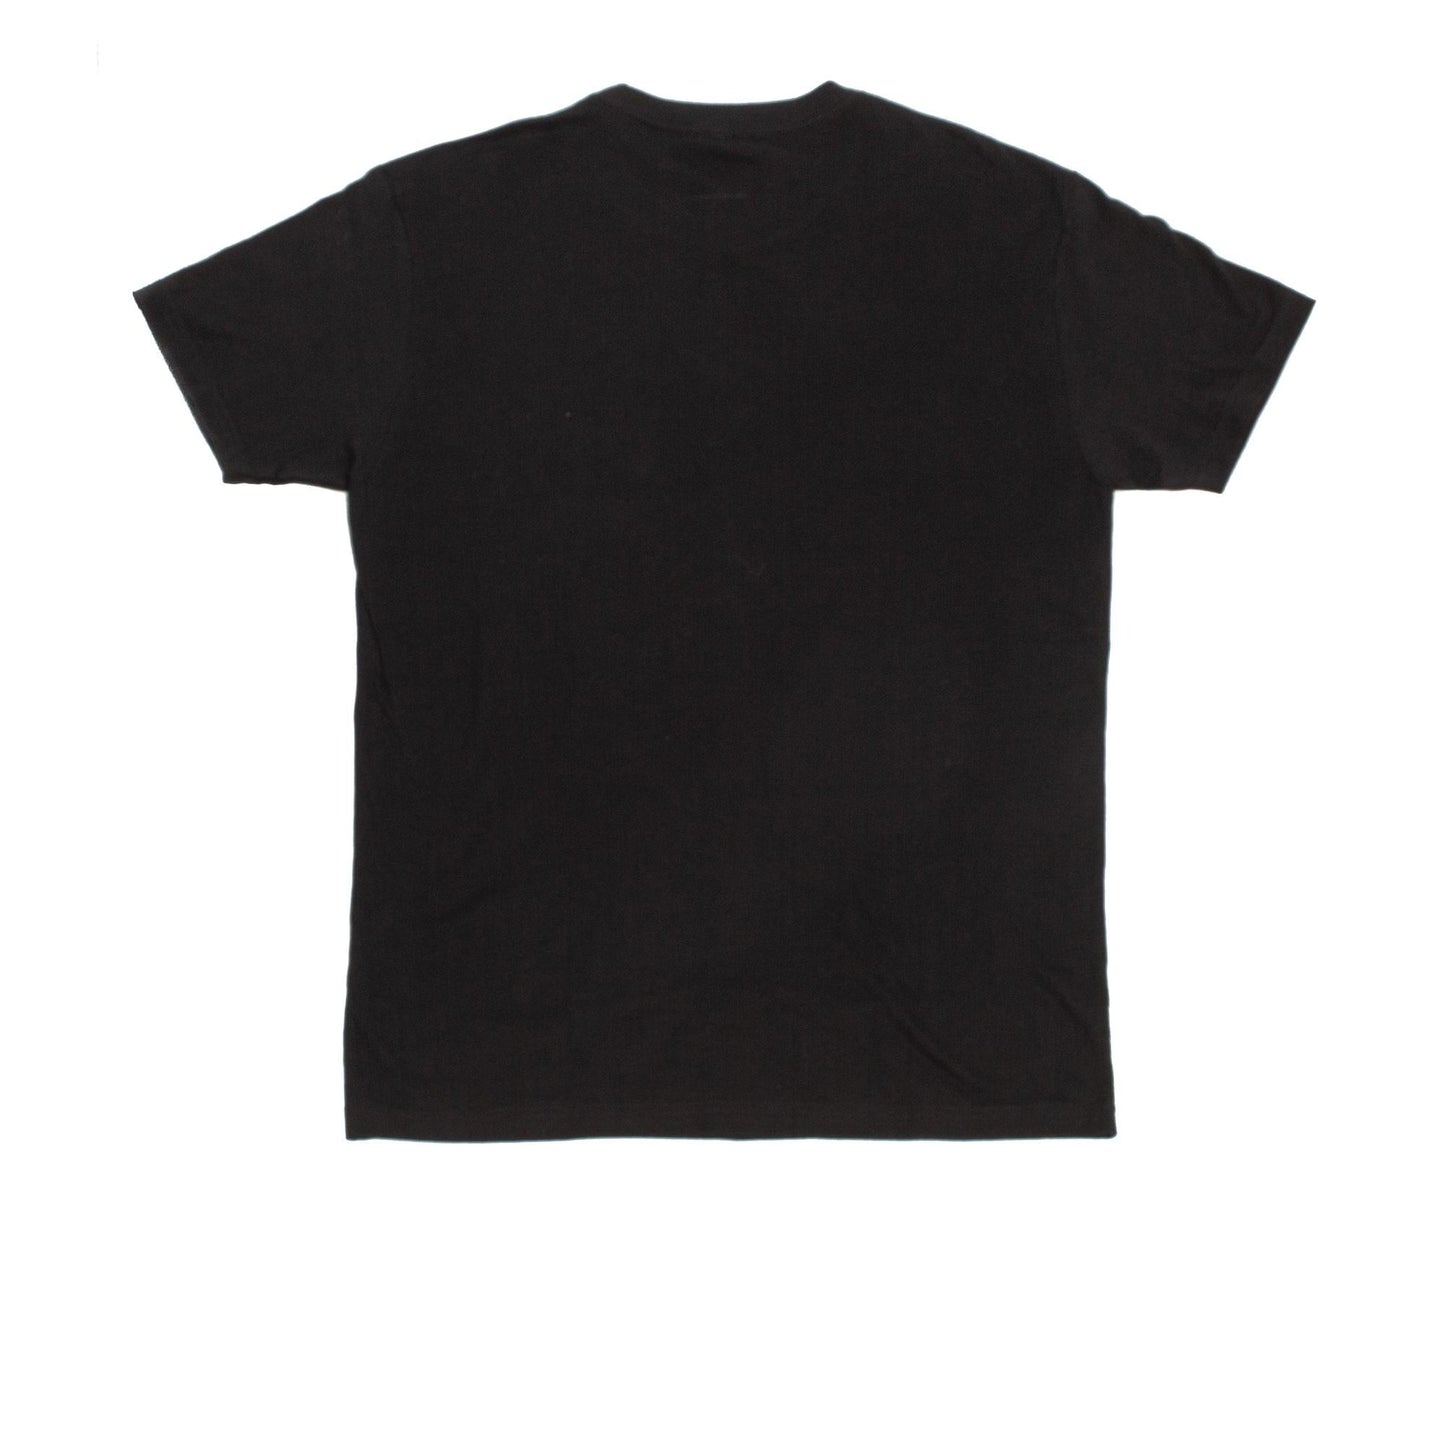 Goorin Bros "Clucker" Black T-Shirt